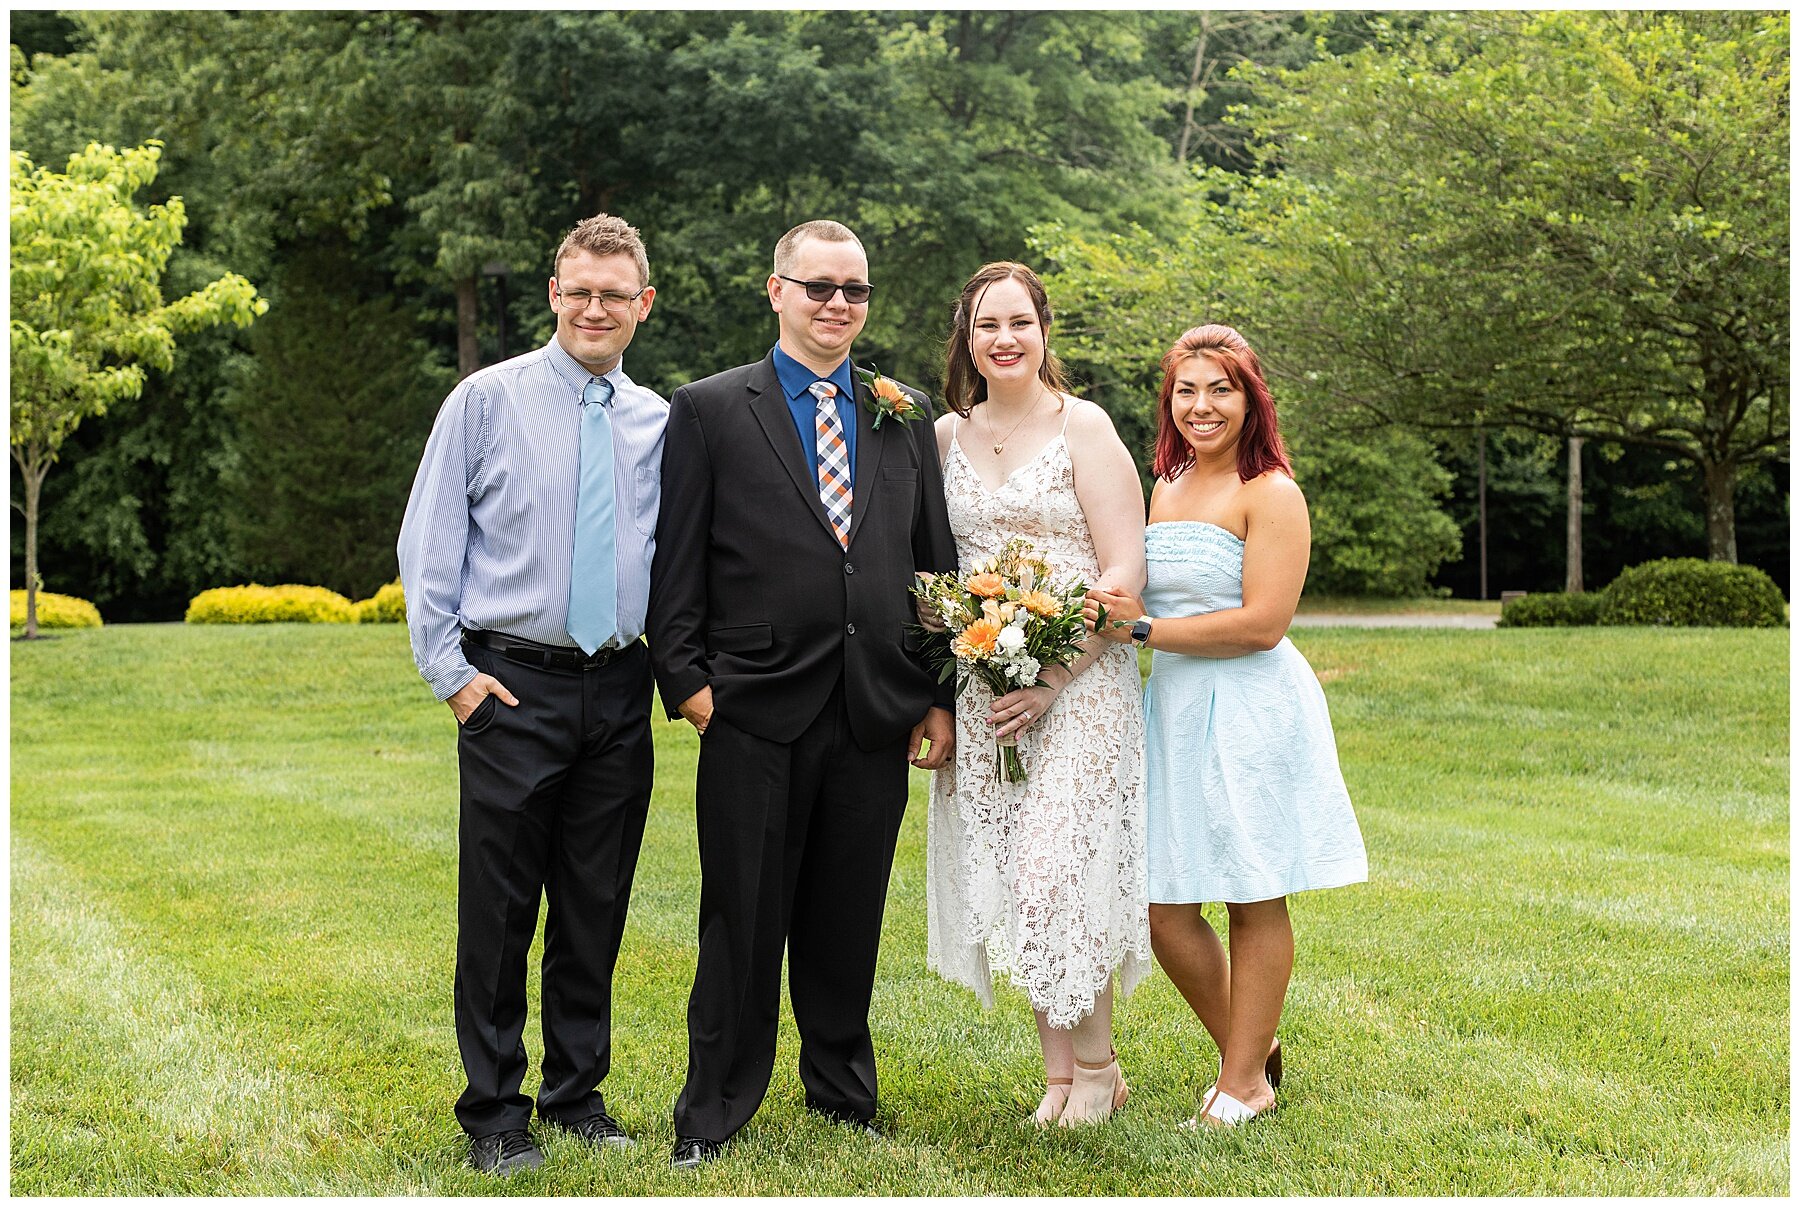 Clare Zach Beloved Weddings Living Radiant Photography - 2020-06-25_0106.jpg